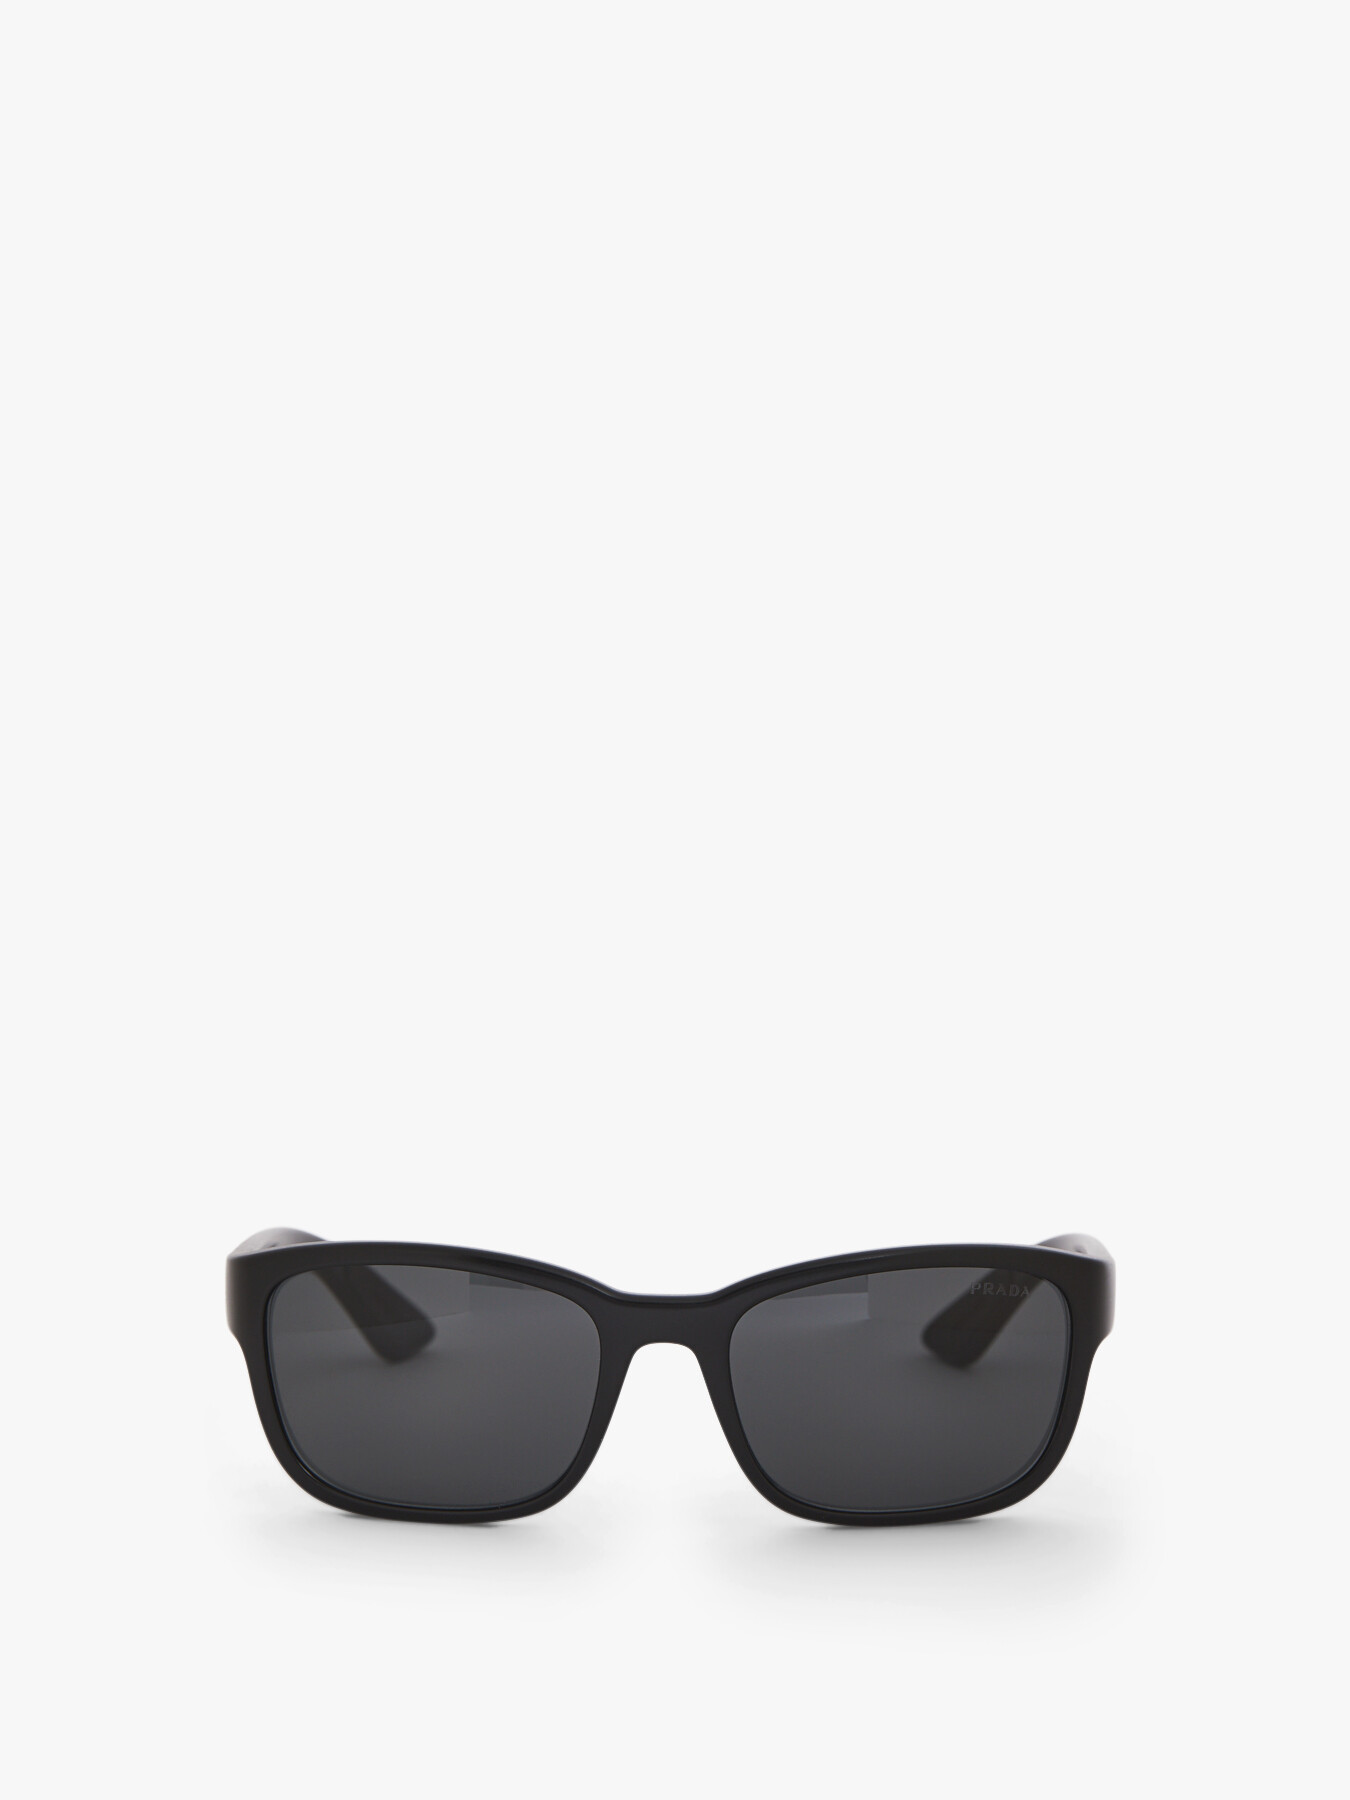 Women's Prada Linea Rossa Acetate Mirrored Lens Sunglasses